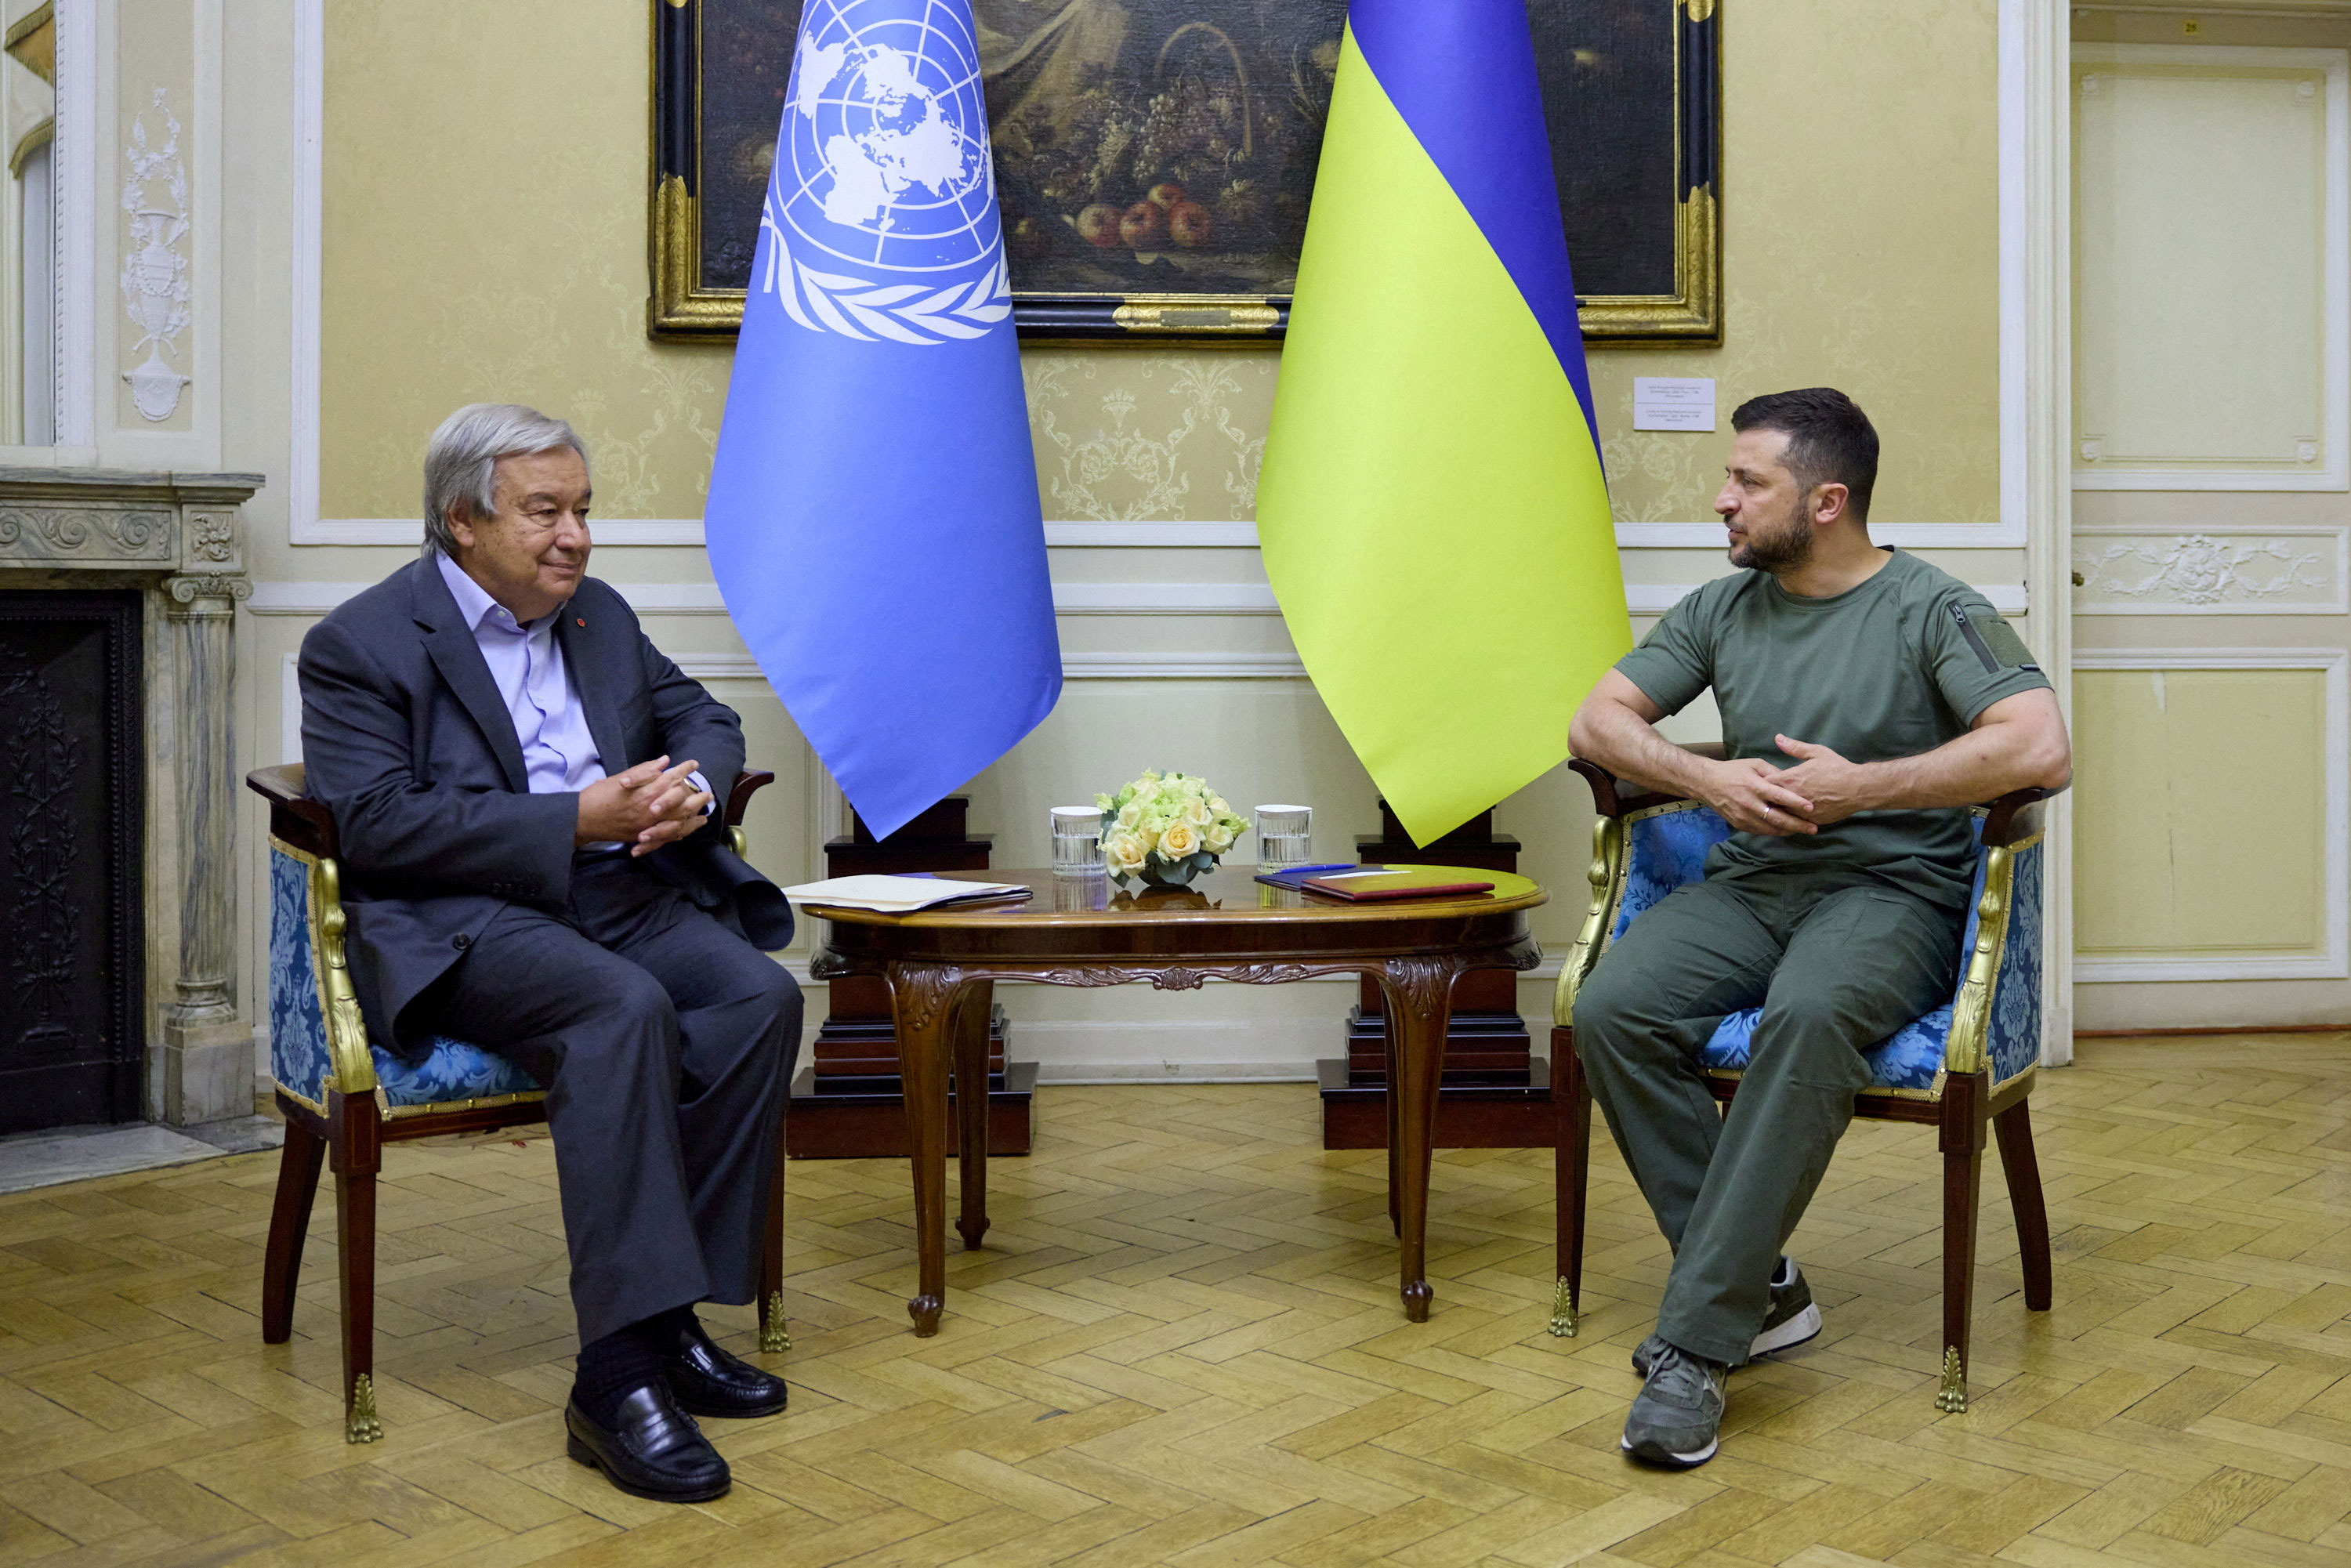 UN Secretary-General Antonio Guterres, left, and Ukraine's President Volodymyr Zelensky post for photos during a meeting in Lviv, Ukraine, on Thursday.